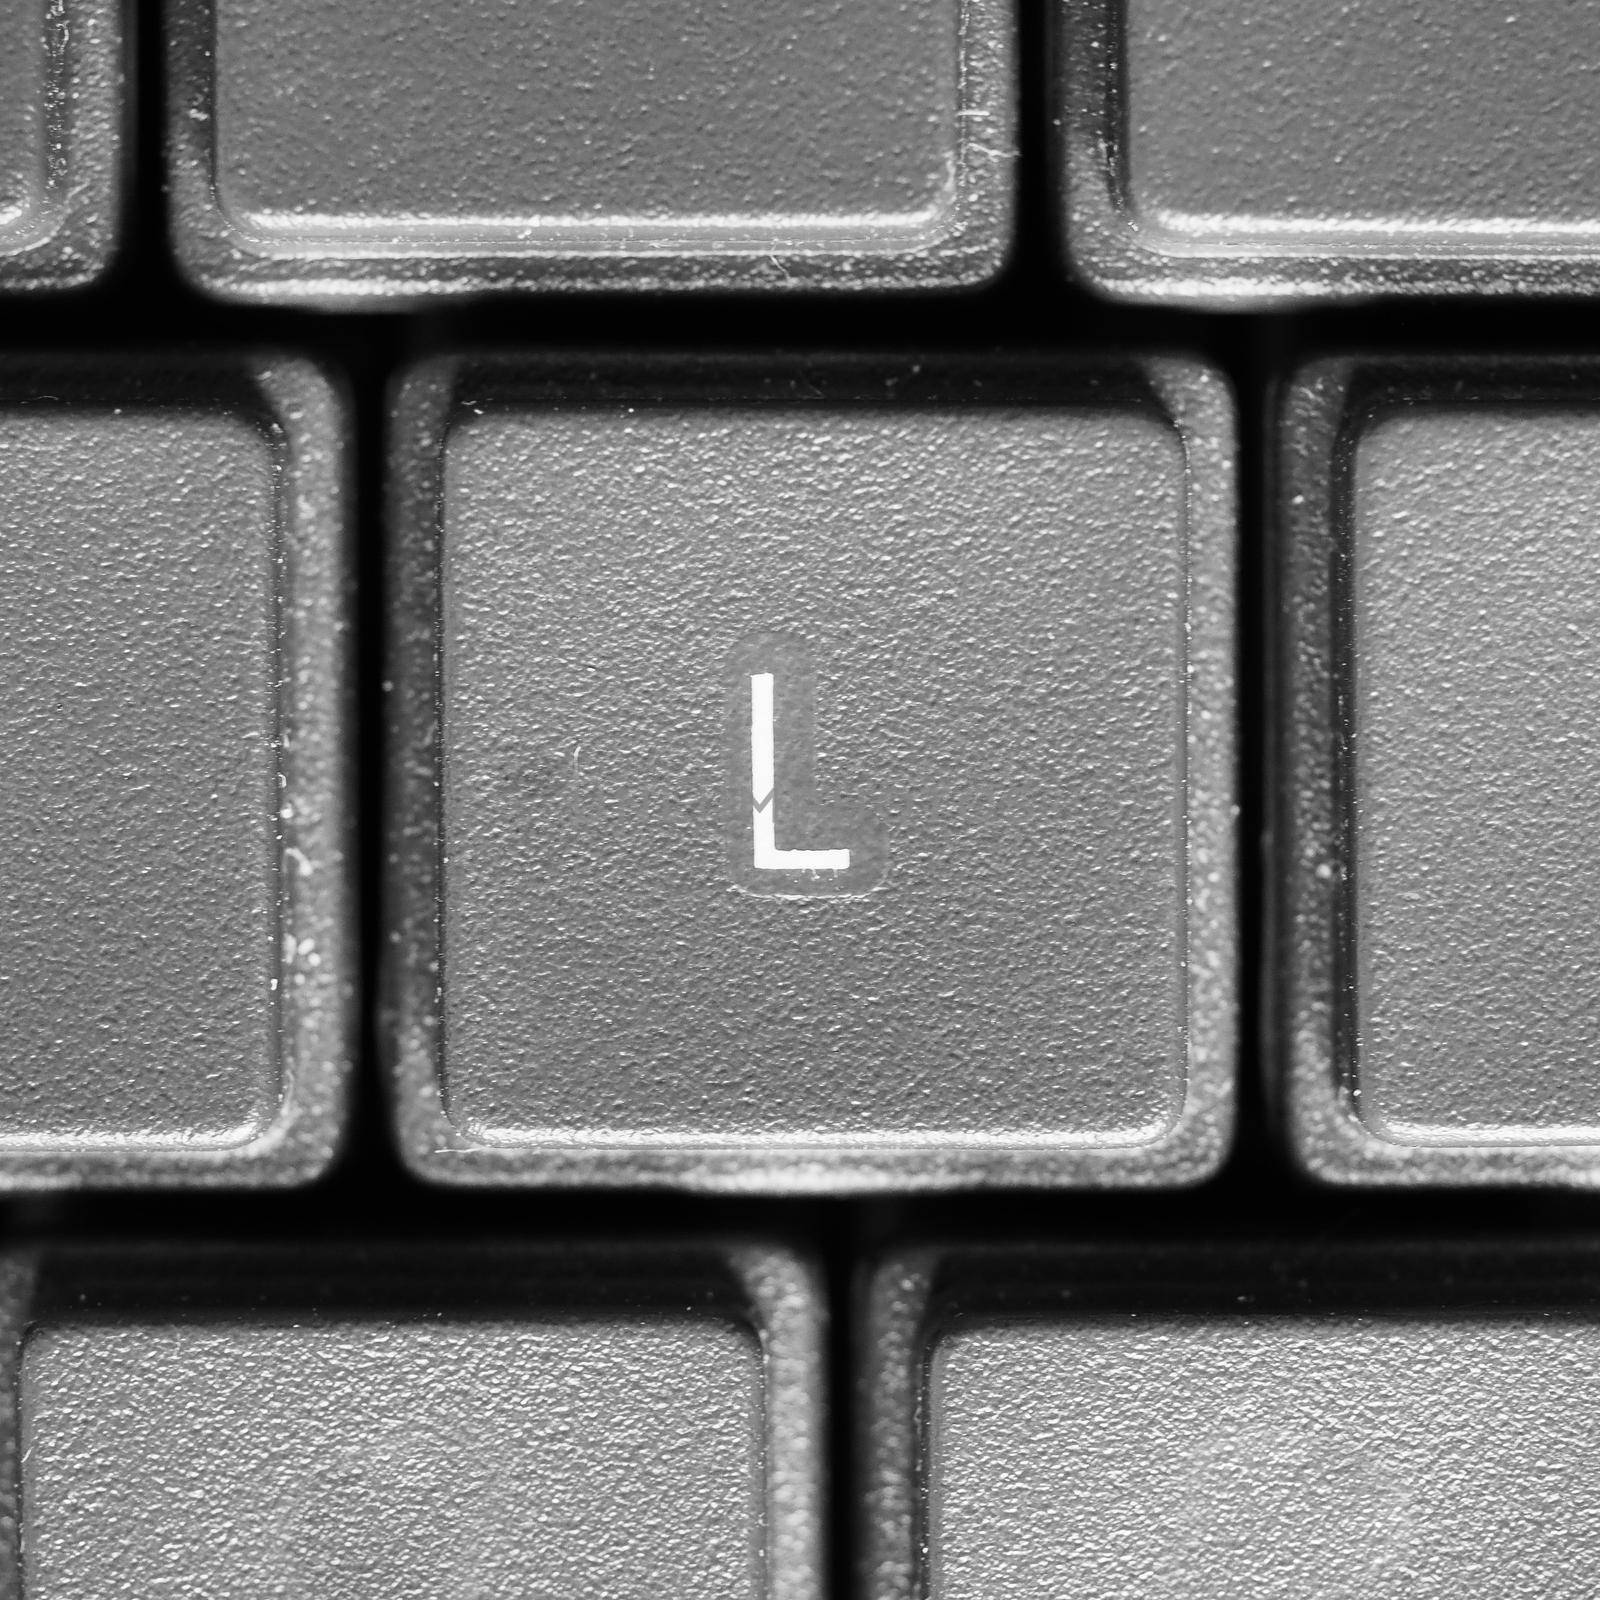 Letter L key on computer keyboard keypad